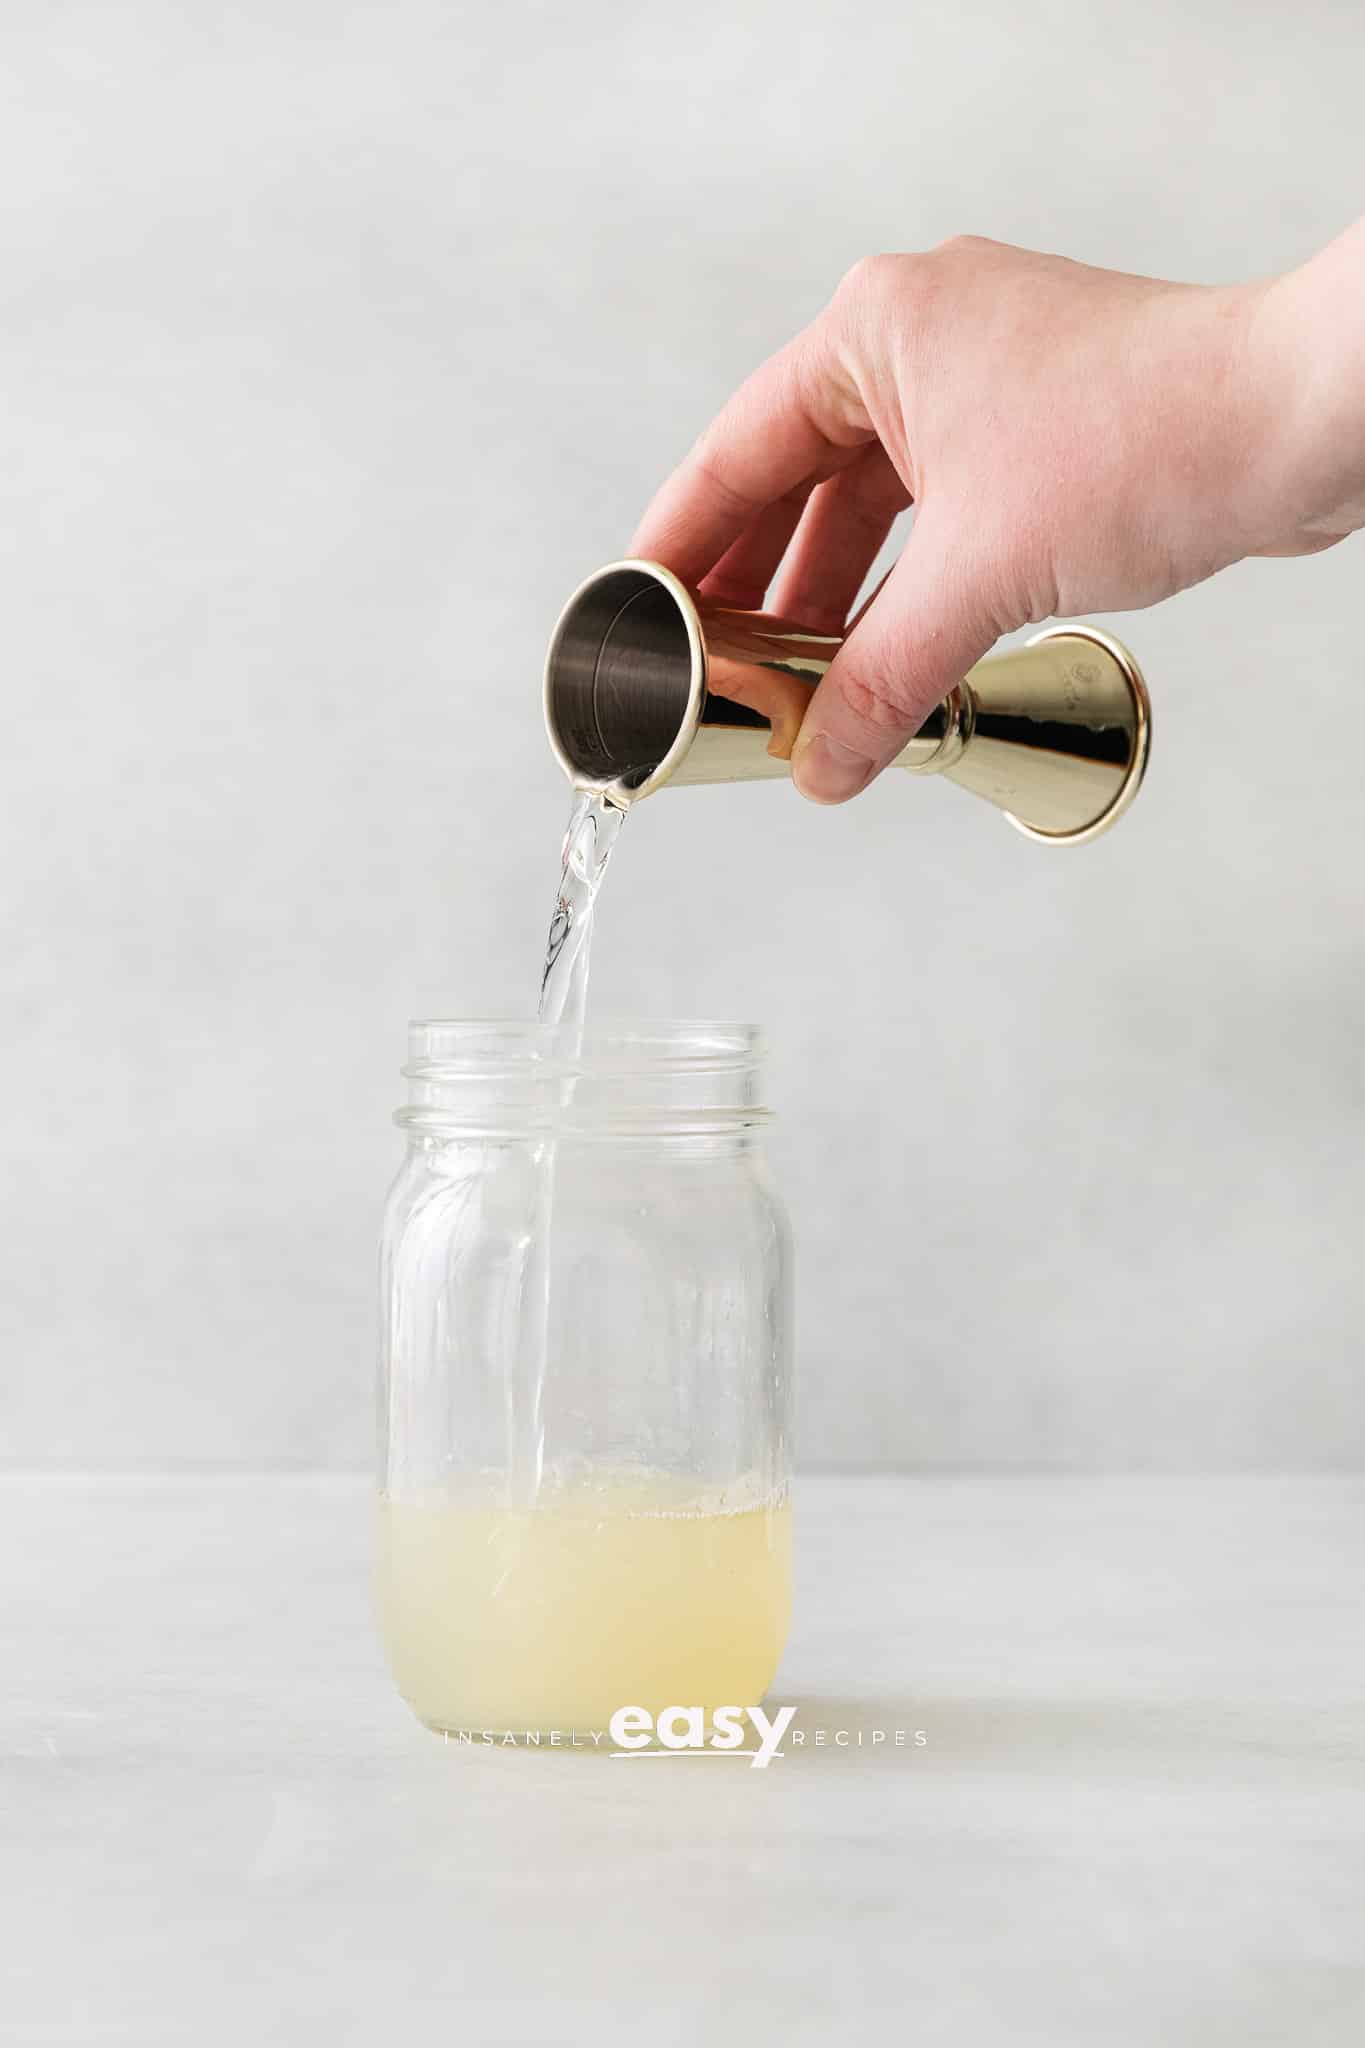 hand pouring yellow liquid into ball jar